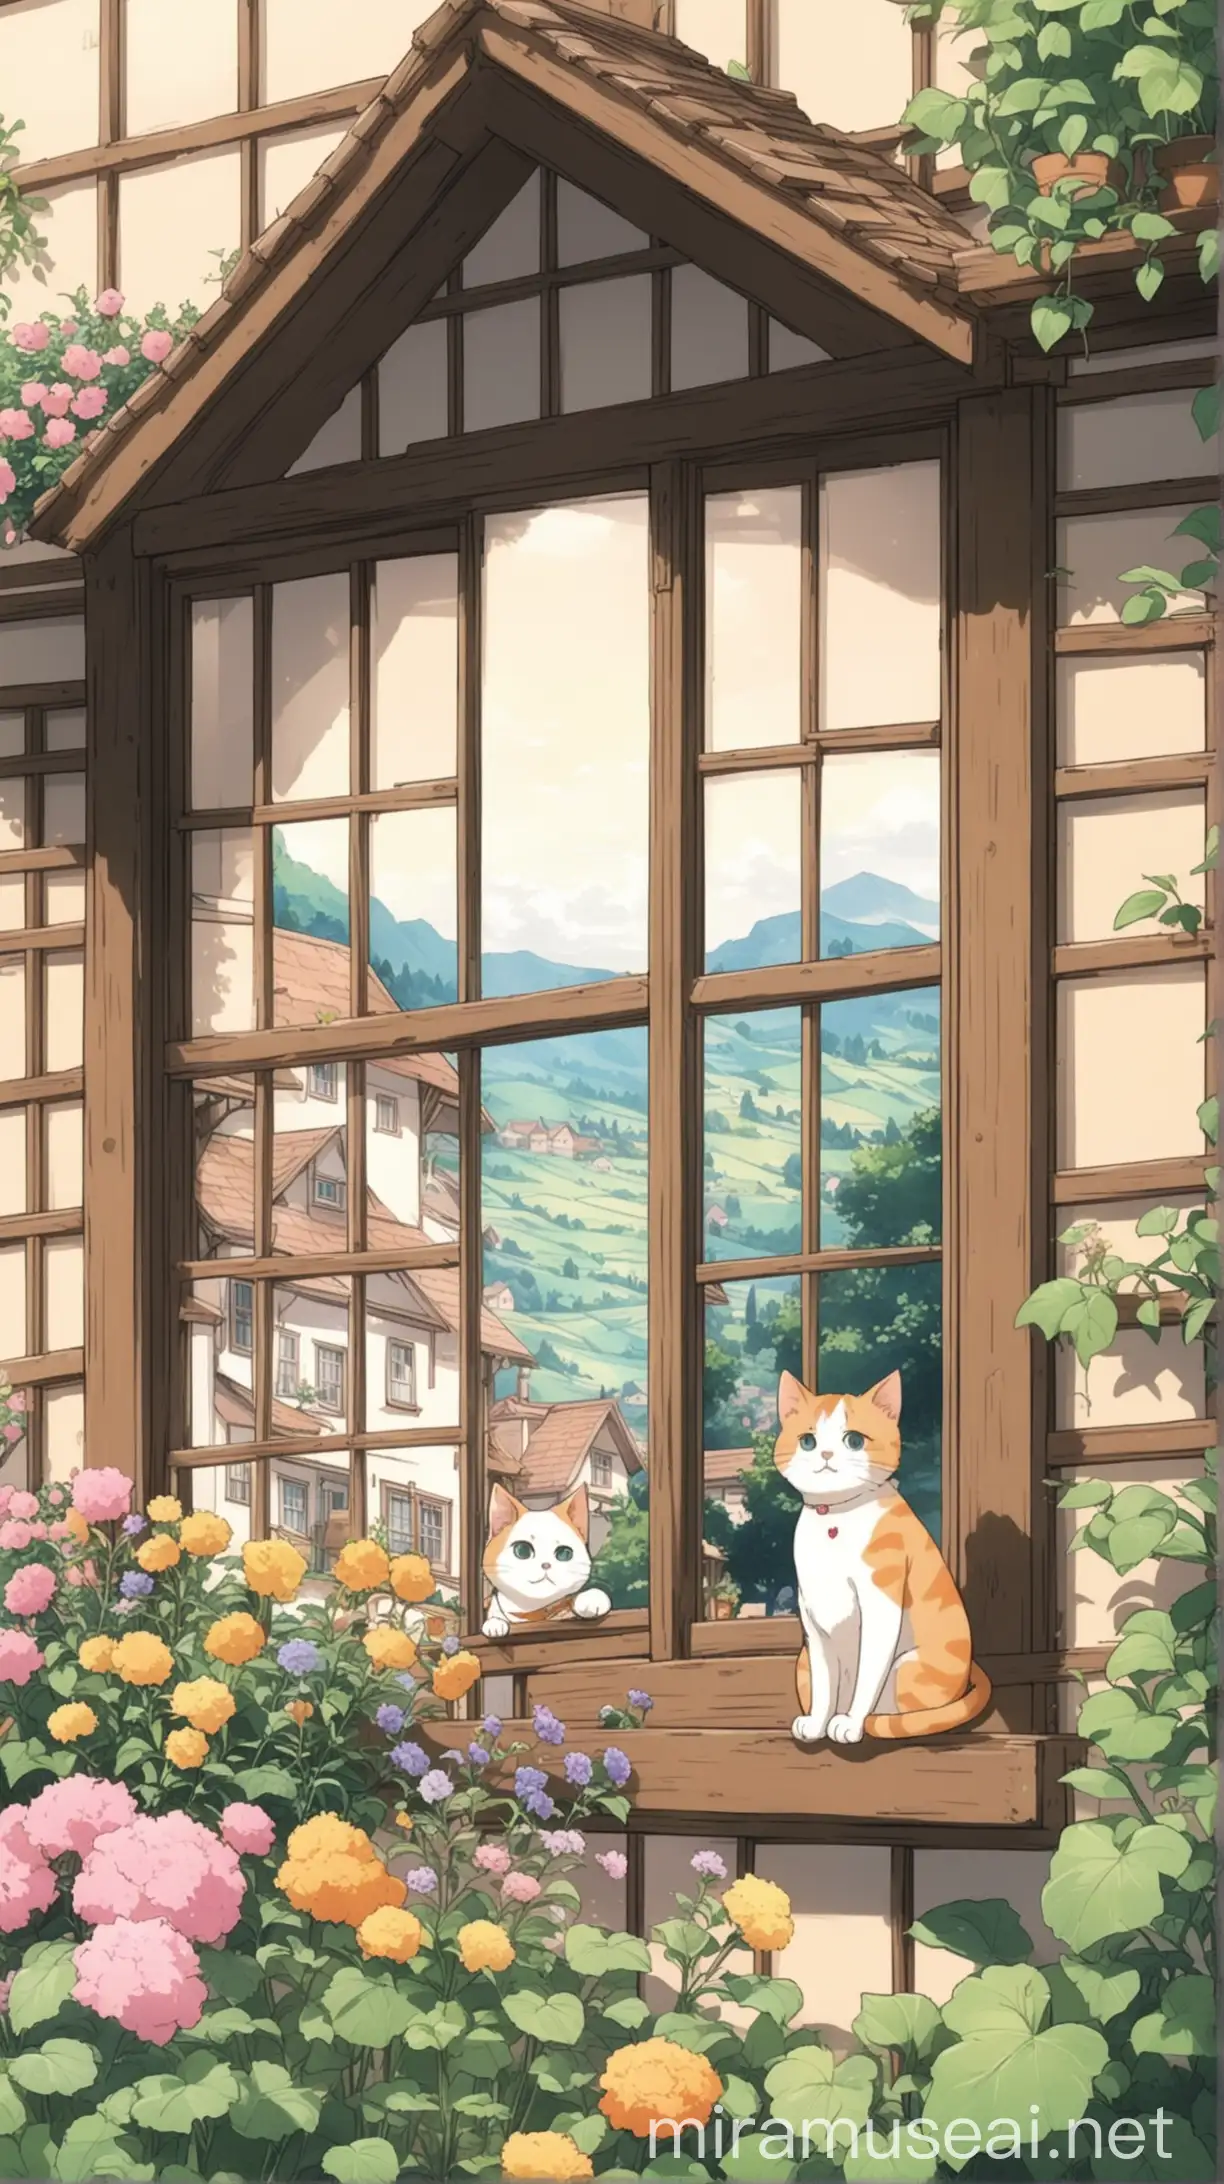 cute aesthetic anime, cat, in window, garden, seen view of village,